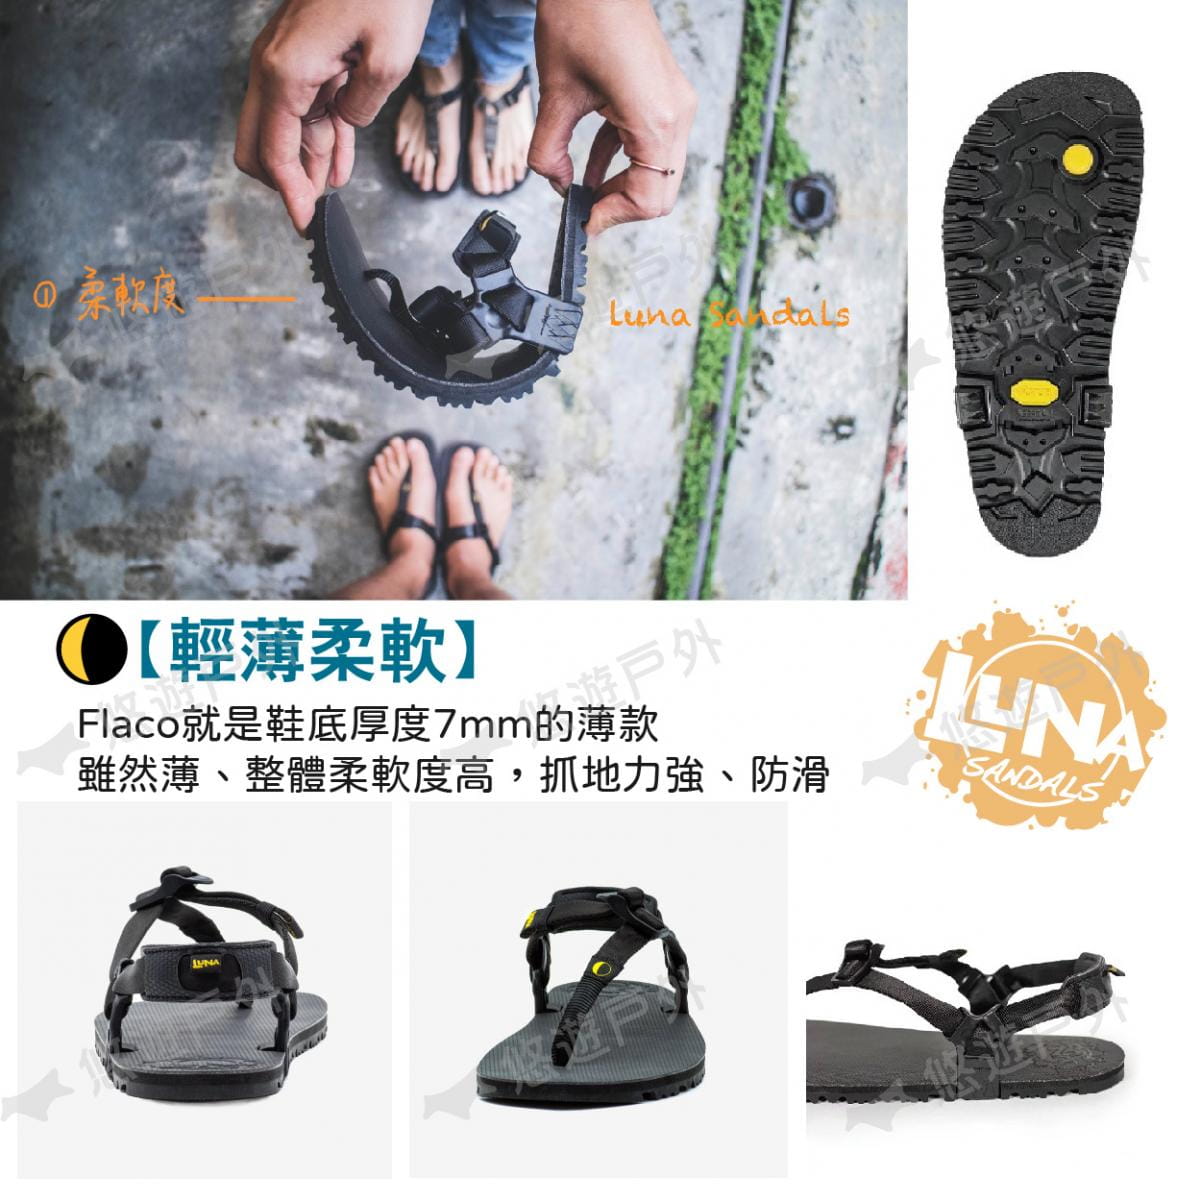 【Luna Sandals】Oso Flaco Winged 涼鞋 7mm款 悠遊戶外 4